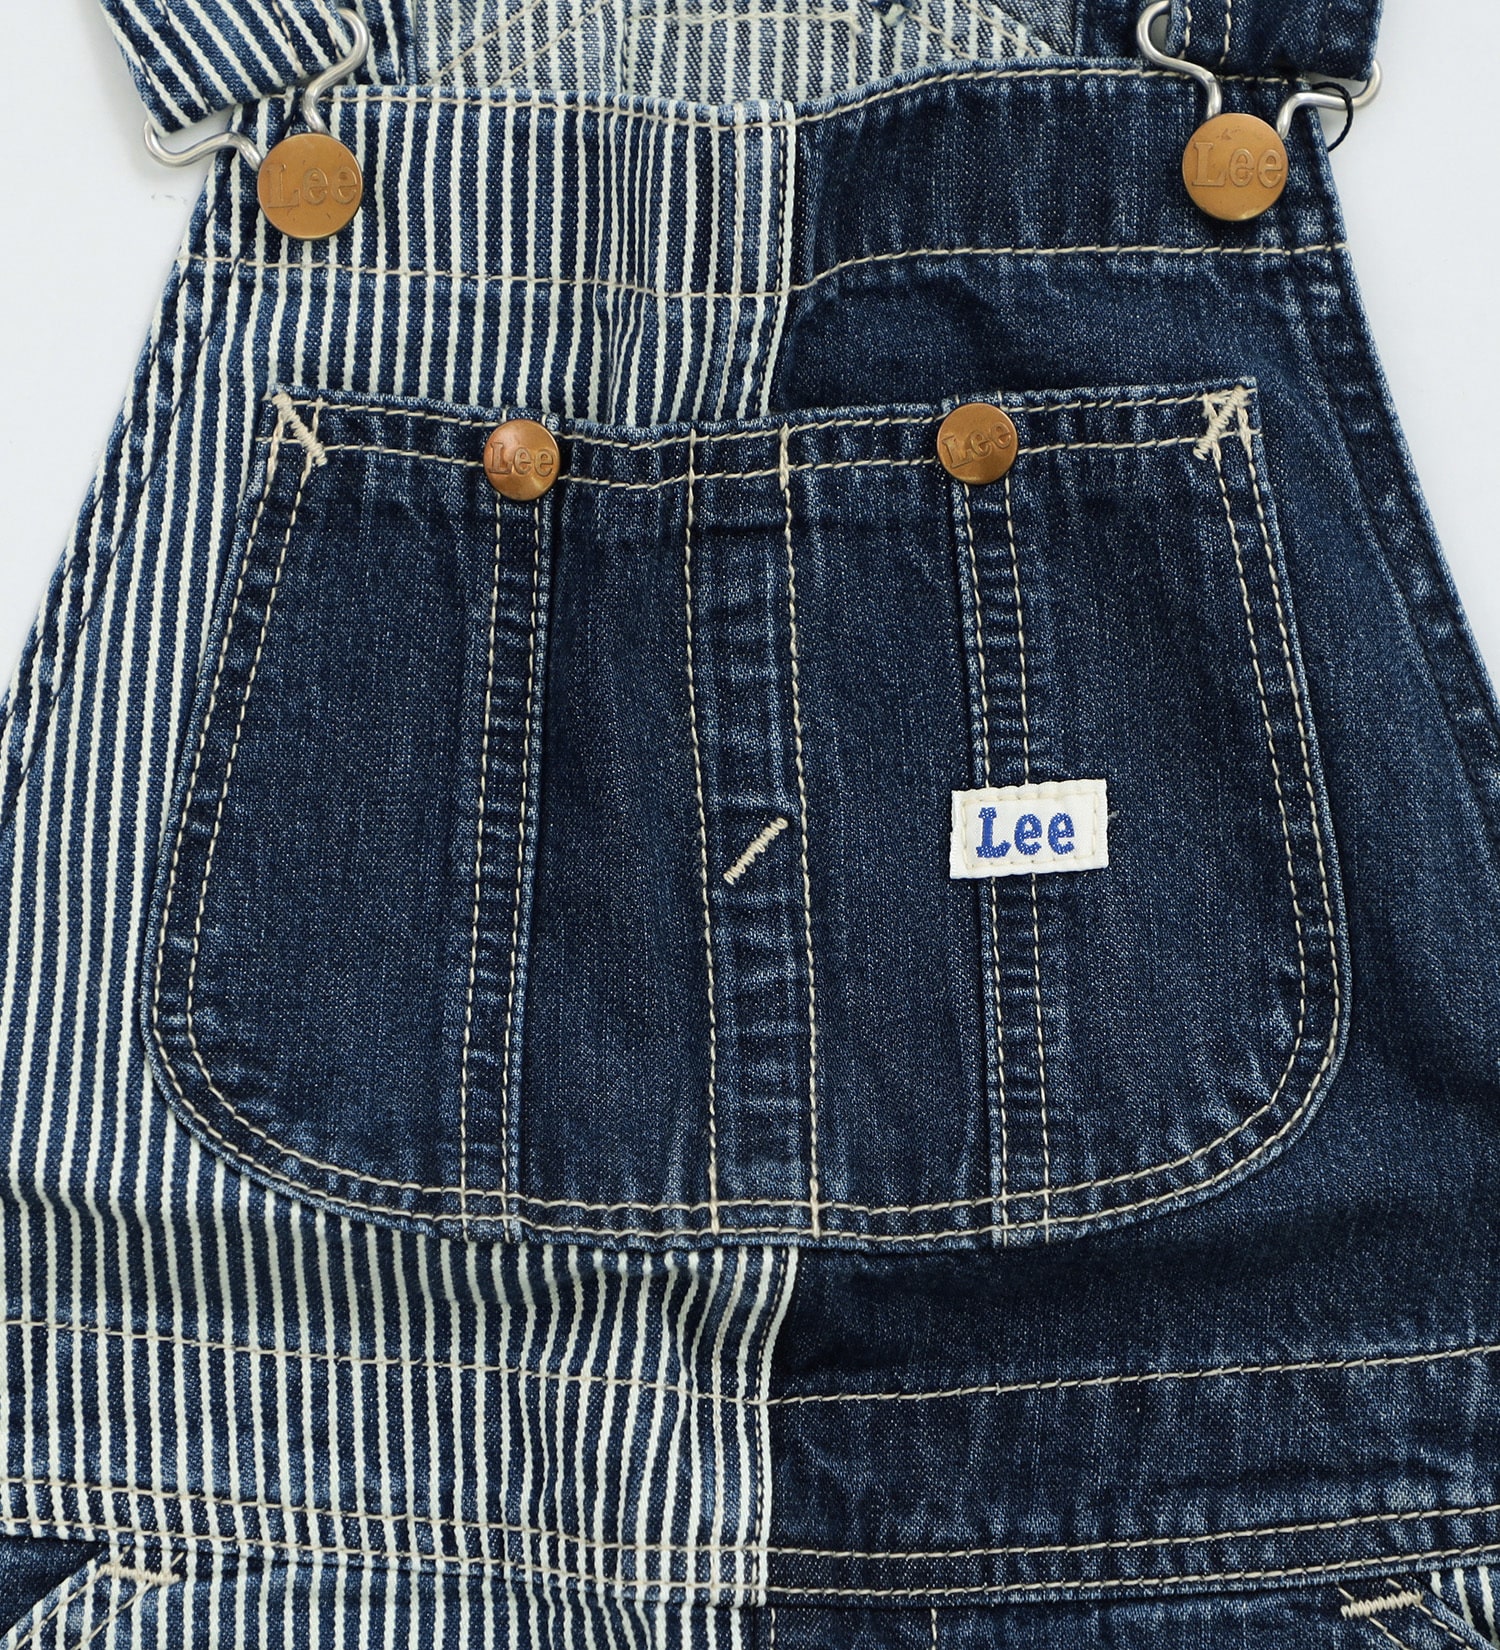 Lee(リー)の【80-100cm】ベビー オーバーオールスカート クレイジーパターン|オールインワン/ジャンパースカート/キッズ|リメイク